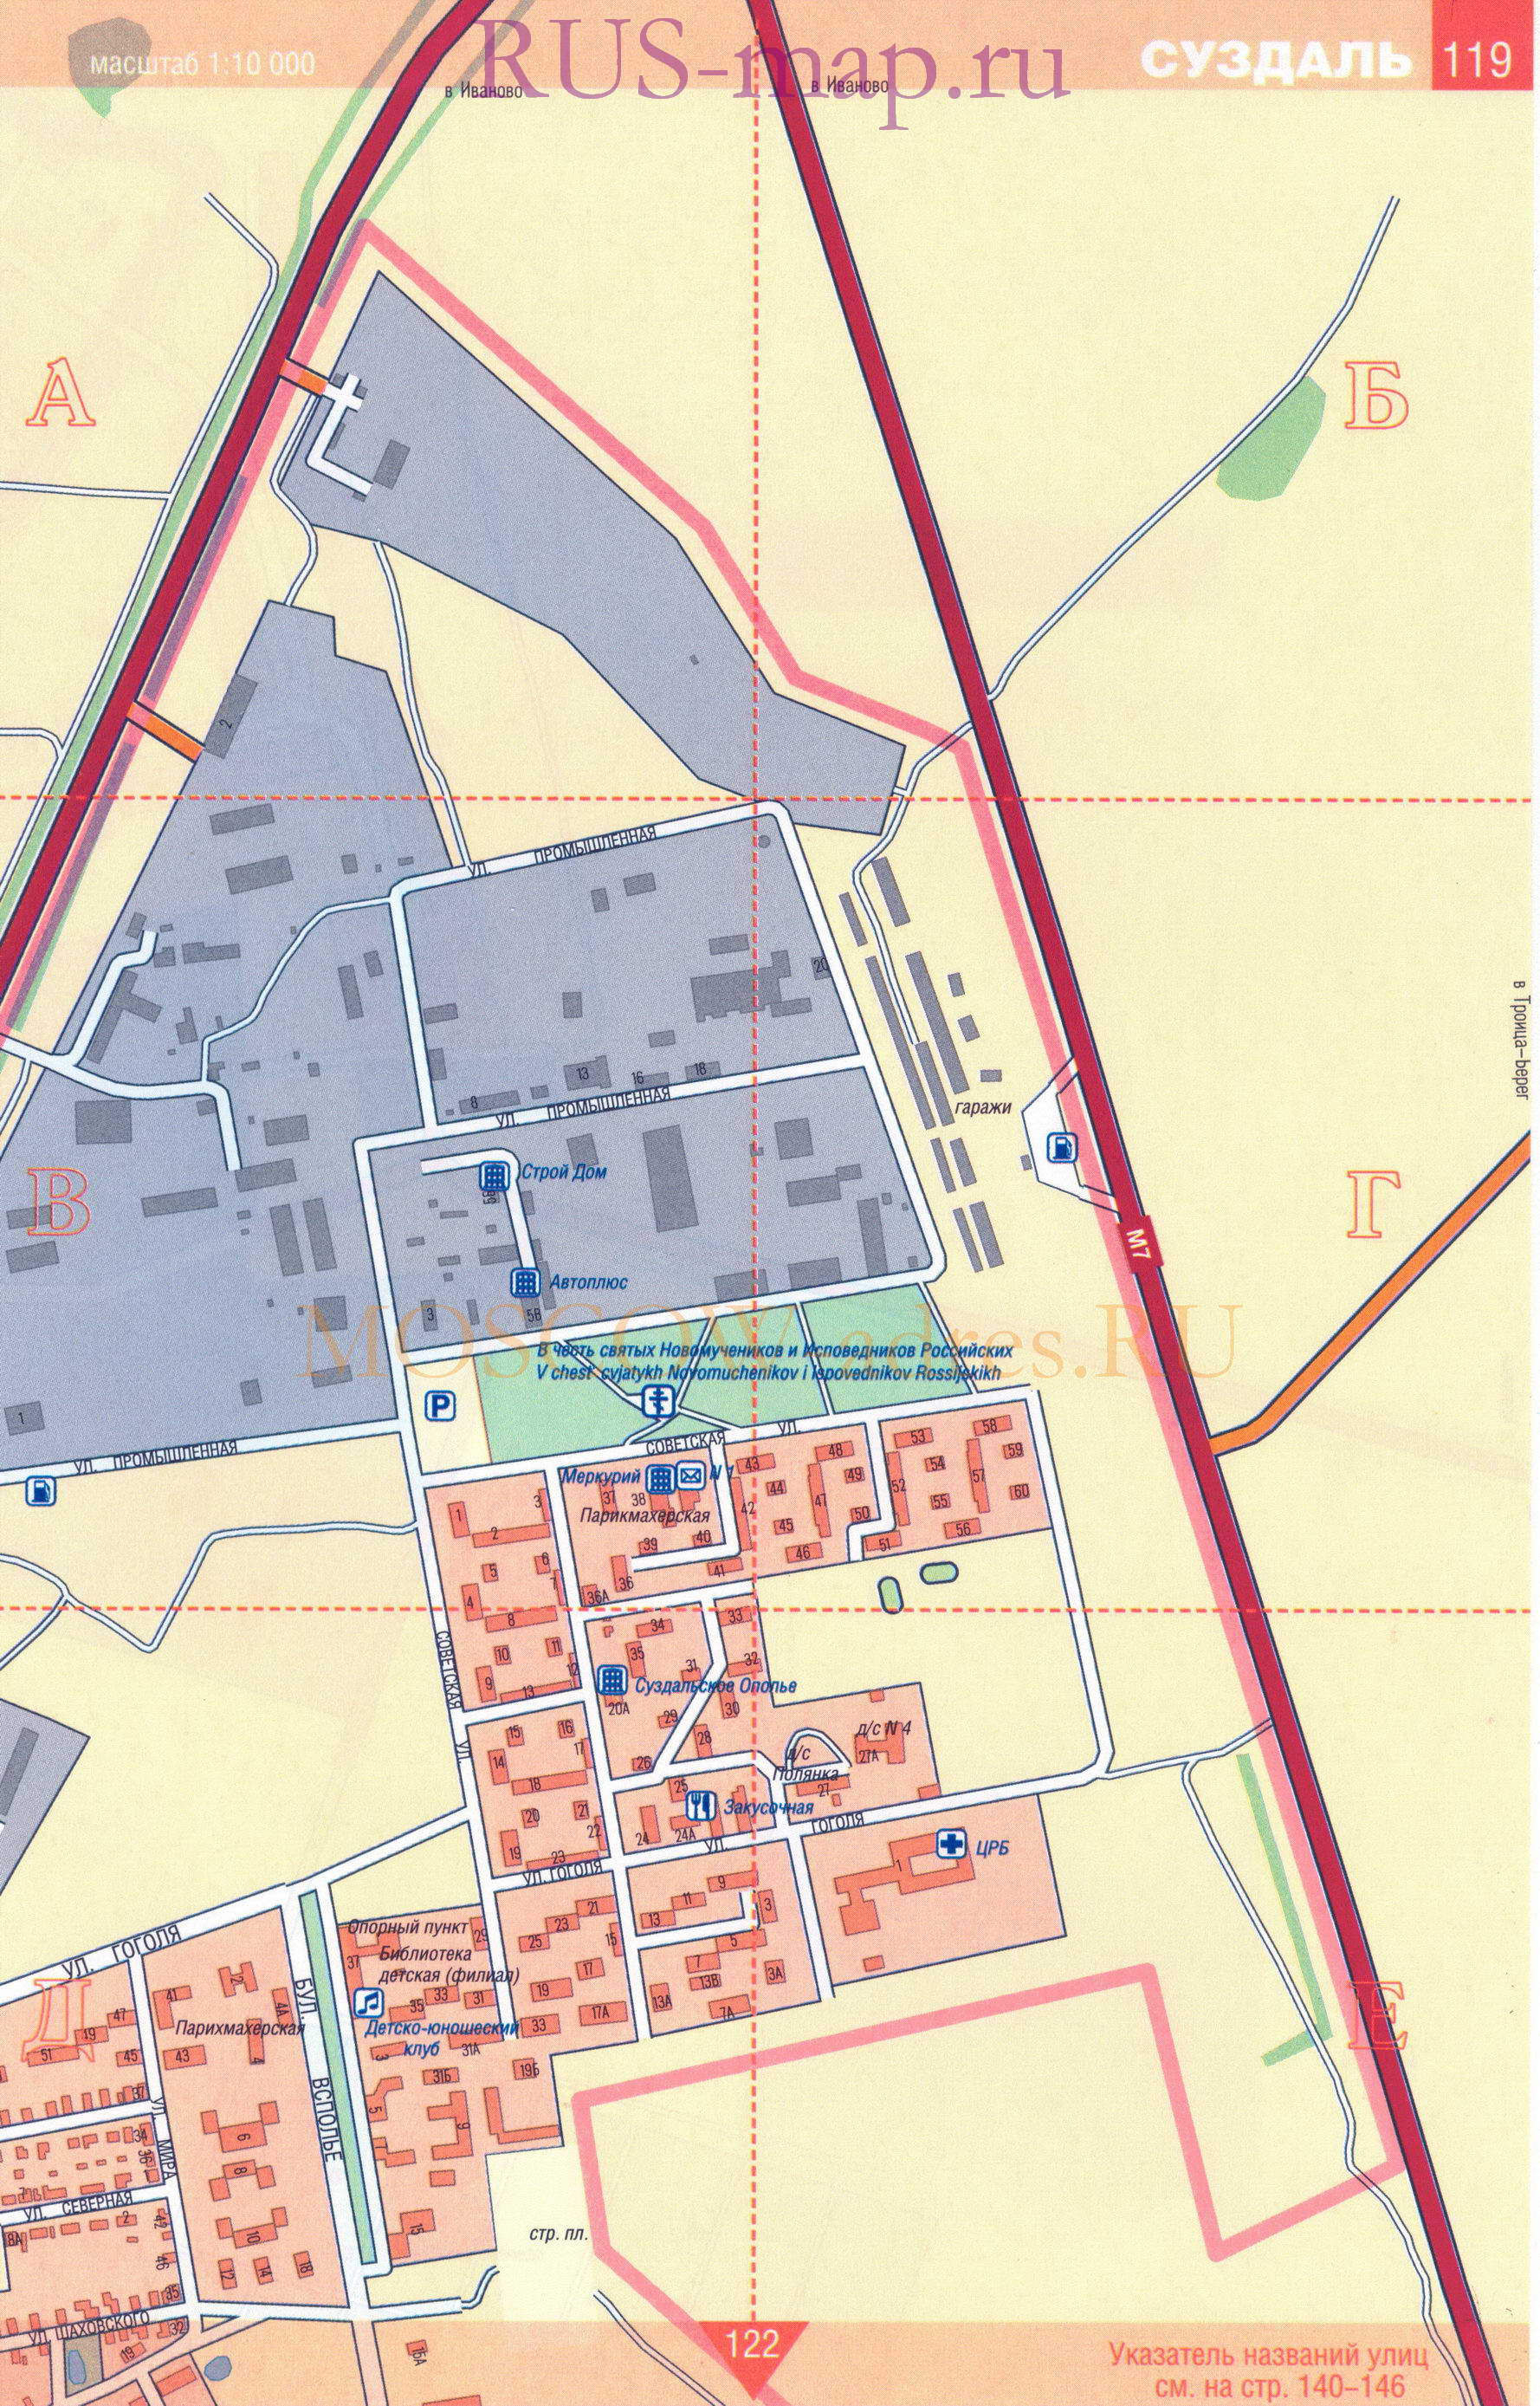 Суздаль. Крупномасштабная карта города Суздаль масштаба 1см:100м, показаны все церкви, музеи, гостиницы, B0 - 